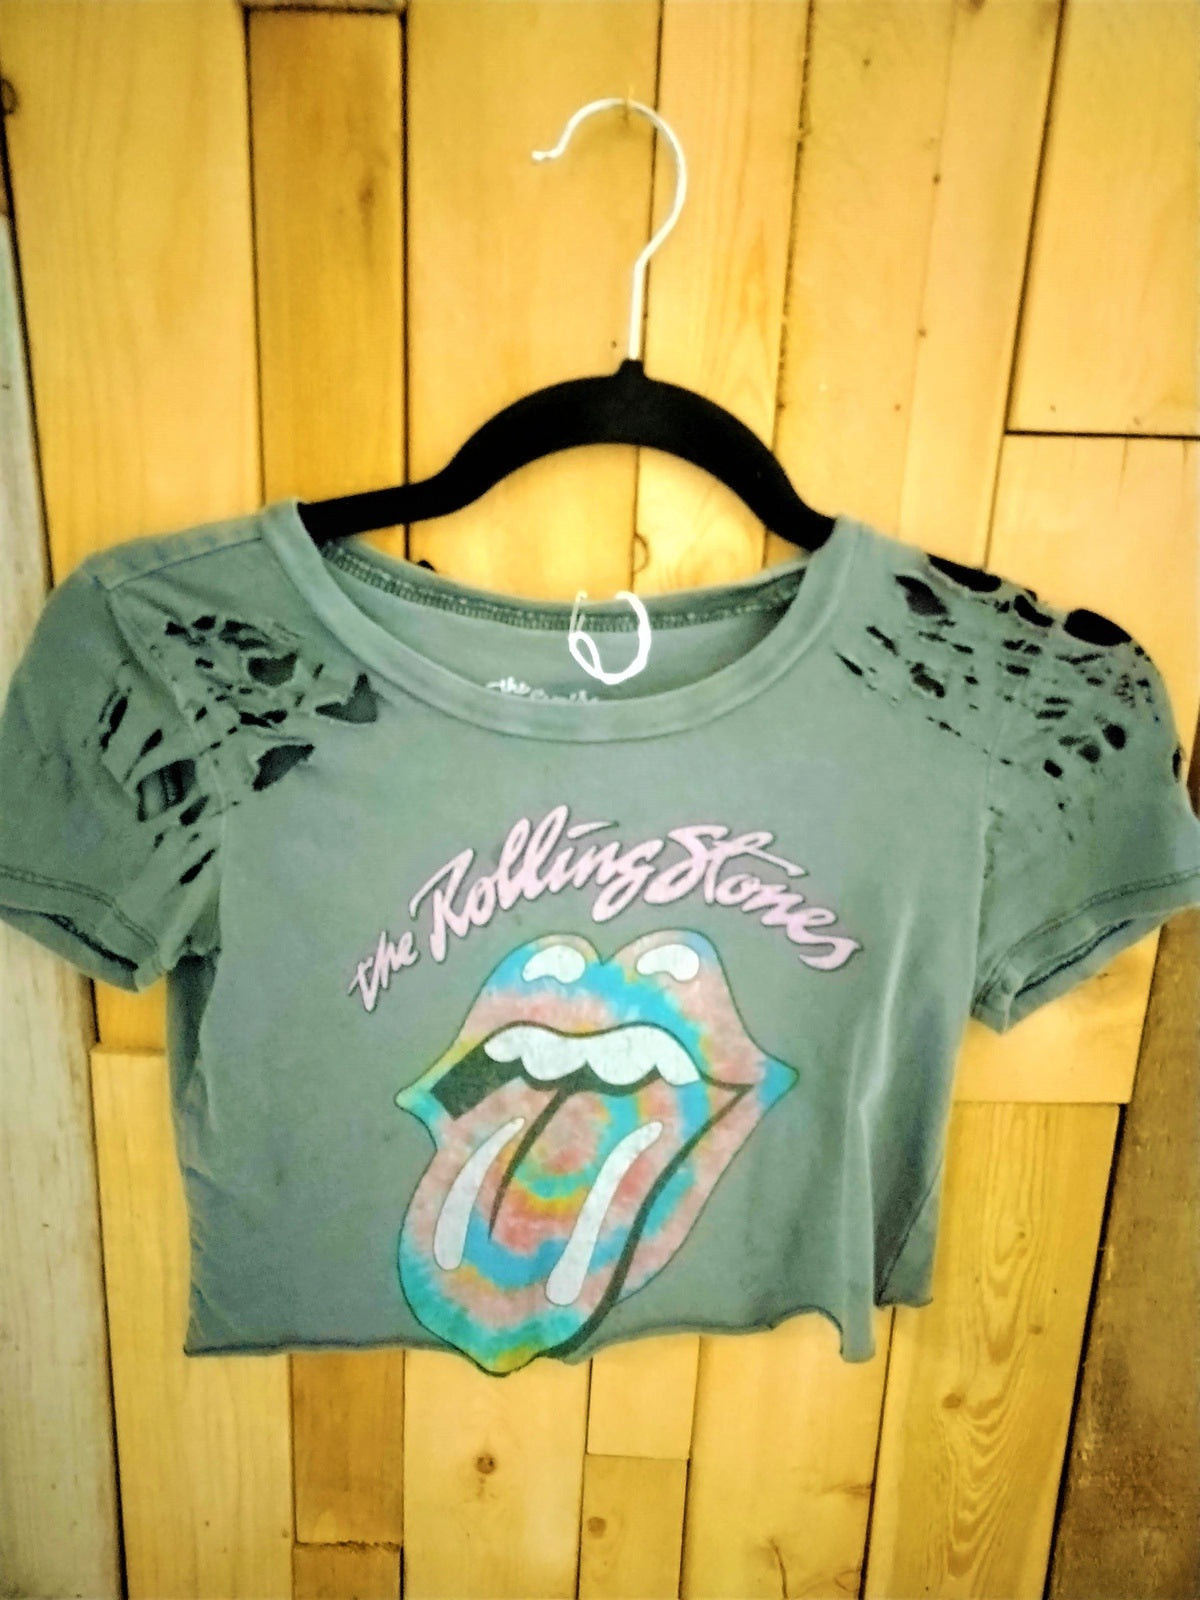 Rolling Stones Crop Tee Shirt Size Women's Small